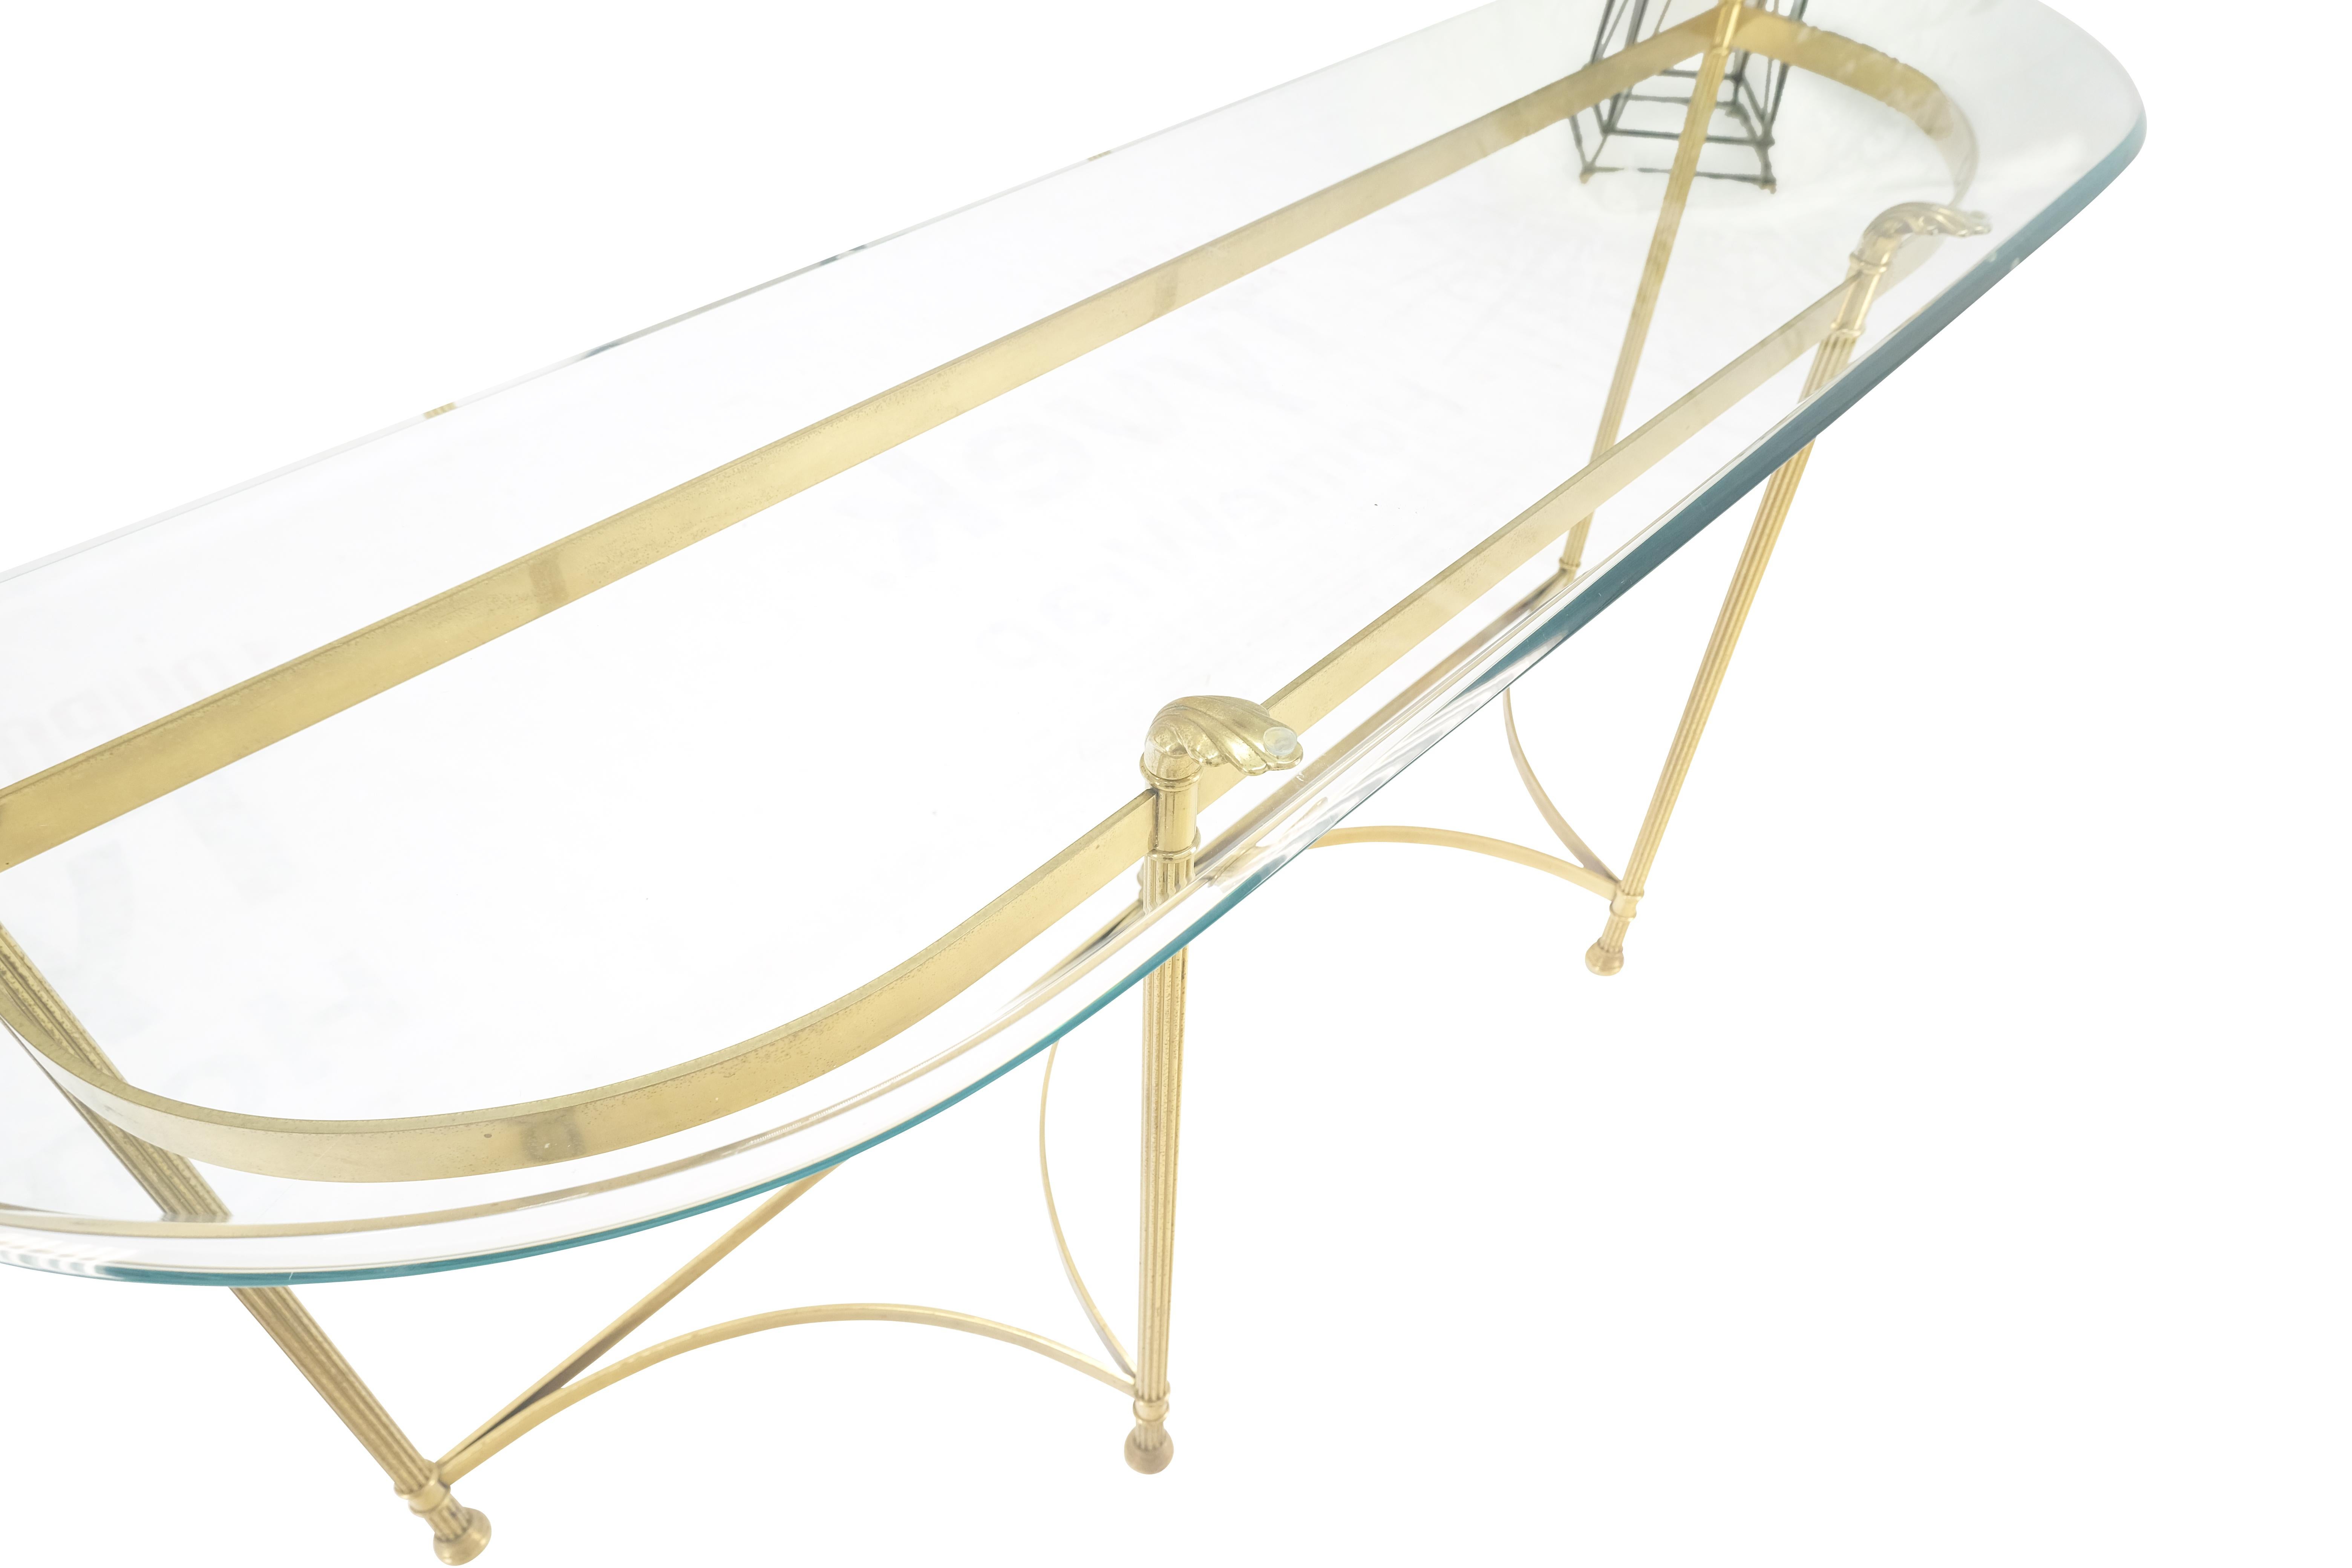 Italian Modern Solid Brass Base Demi Lune Shape Glass Top Console Sofa Table MINT!
glass: 1/2in